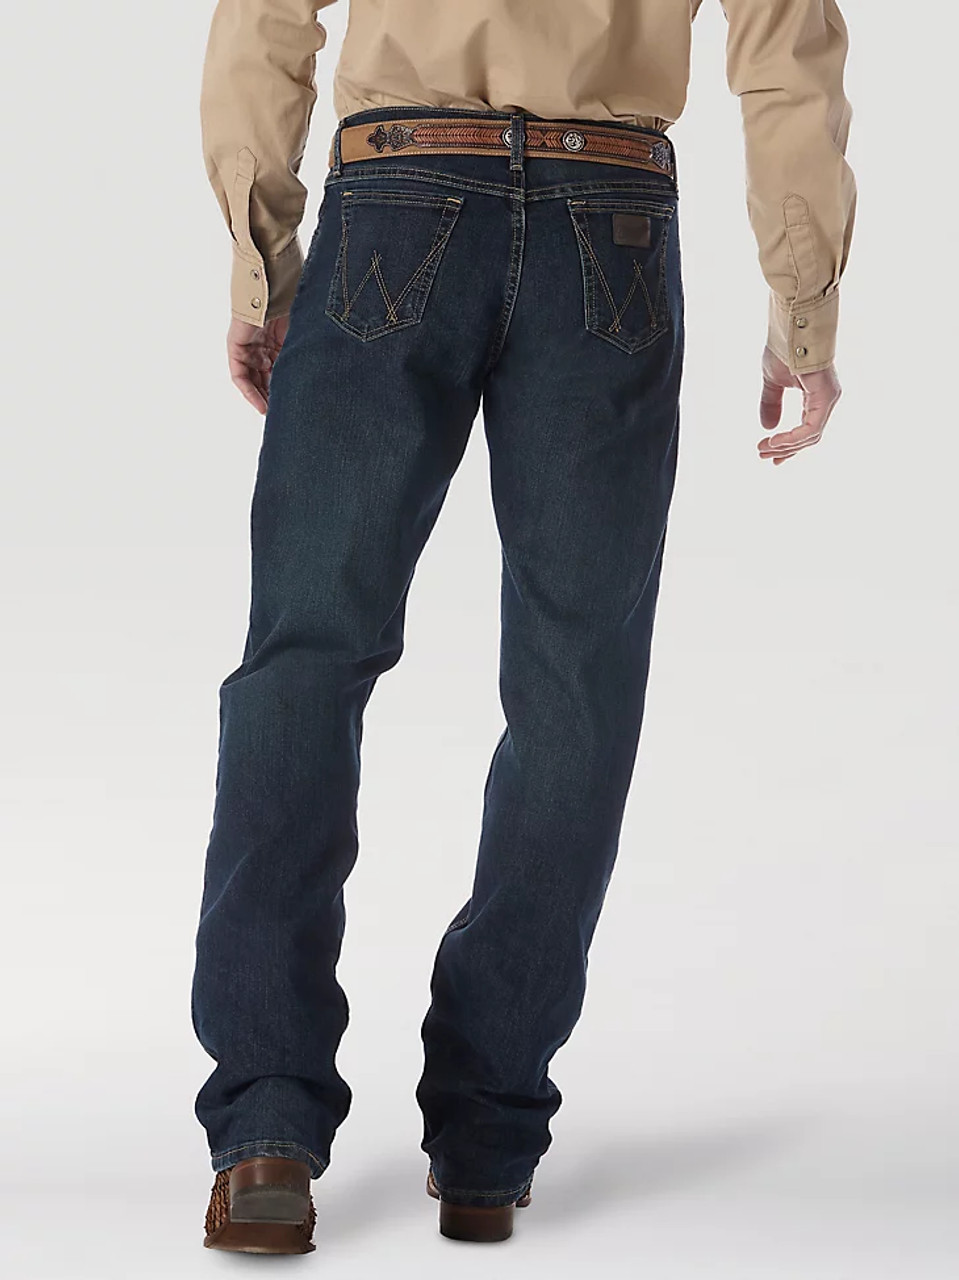 Wrangler Mens Jeans - Wrangler 20X - Advanced Comfort - RB Wash - Billy ...